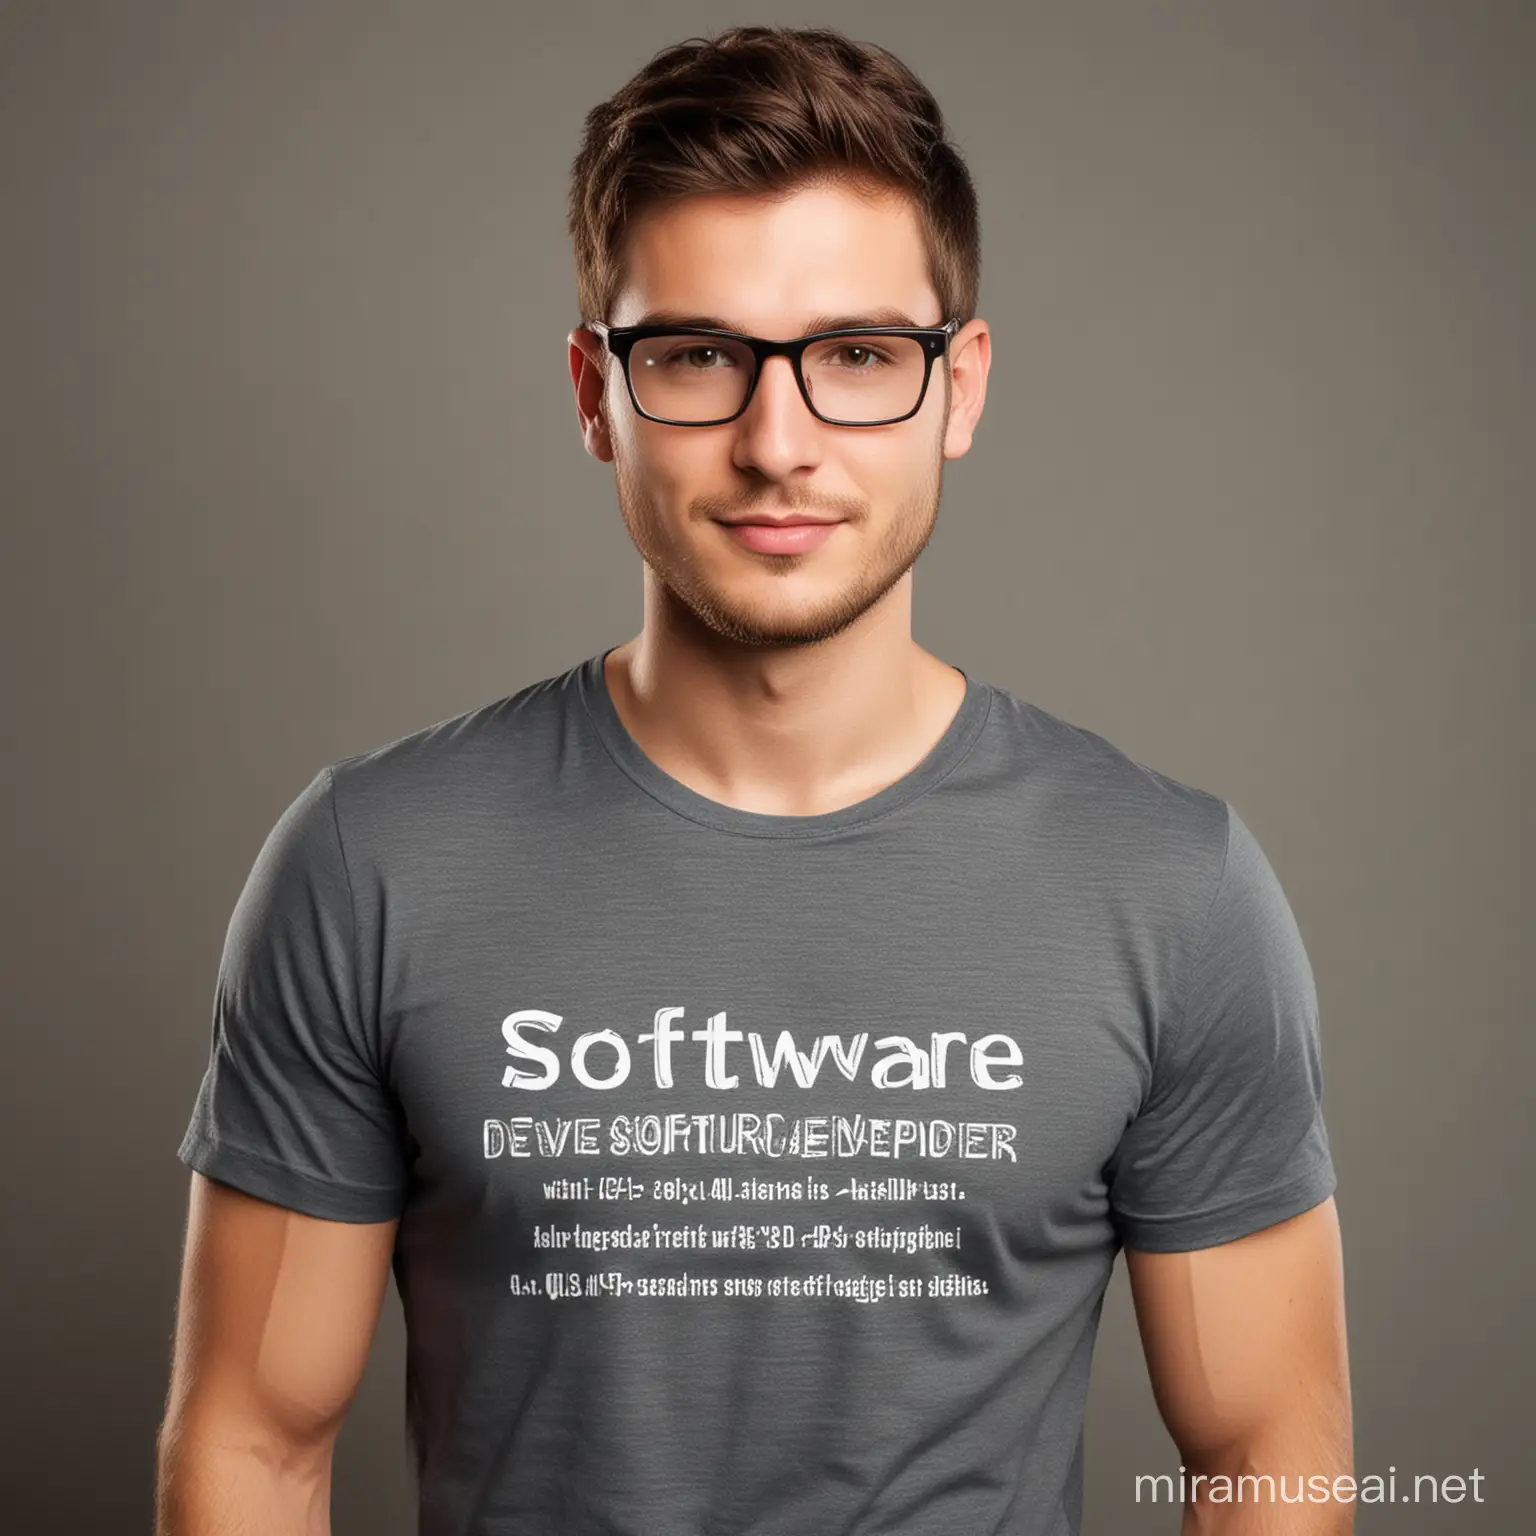 Handsome Software Developer Wearing Cute Glasses